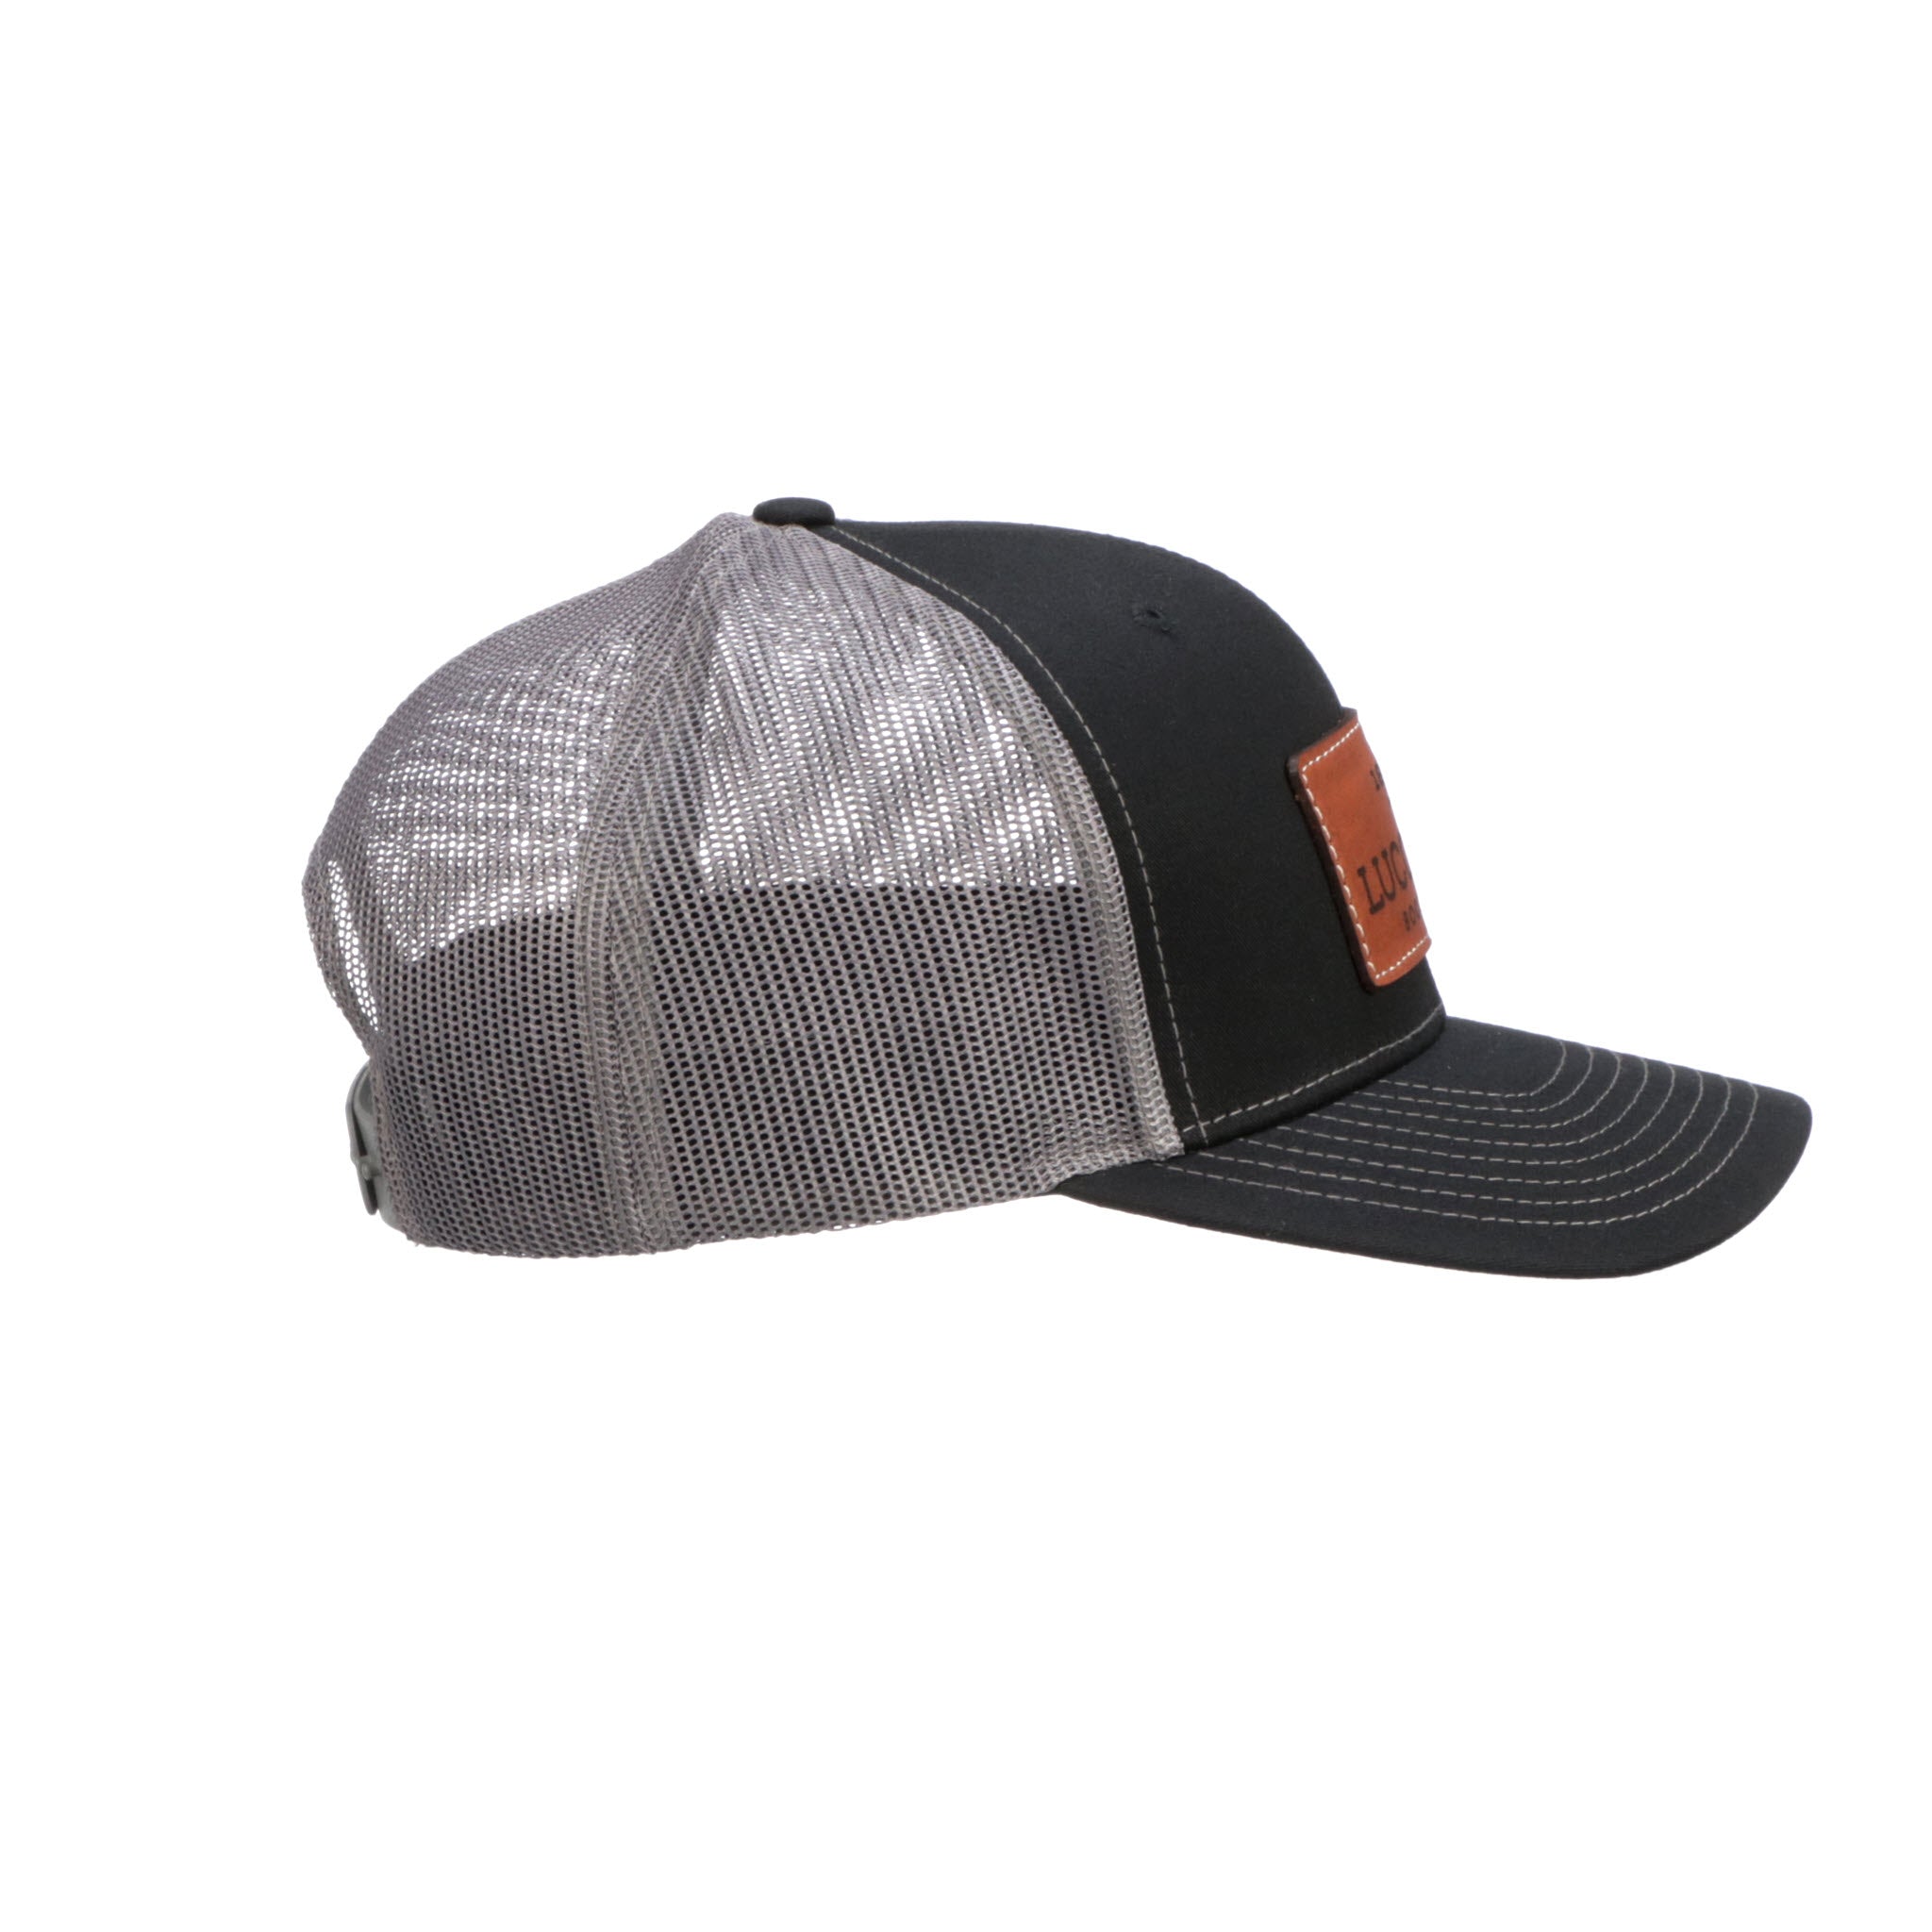 Leather Patch Hat Dk Orange/Charcoal/Black